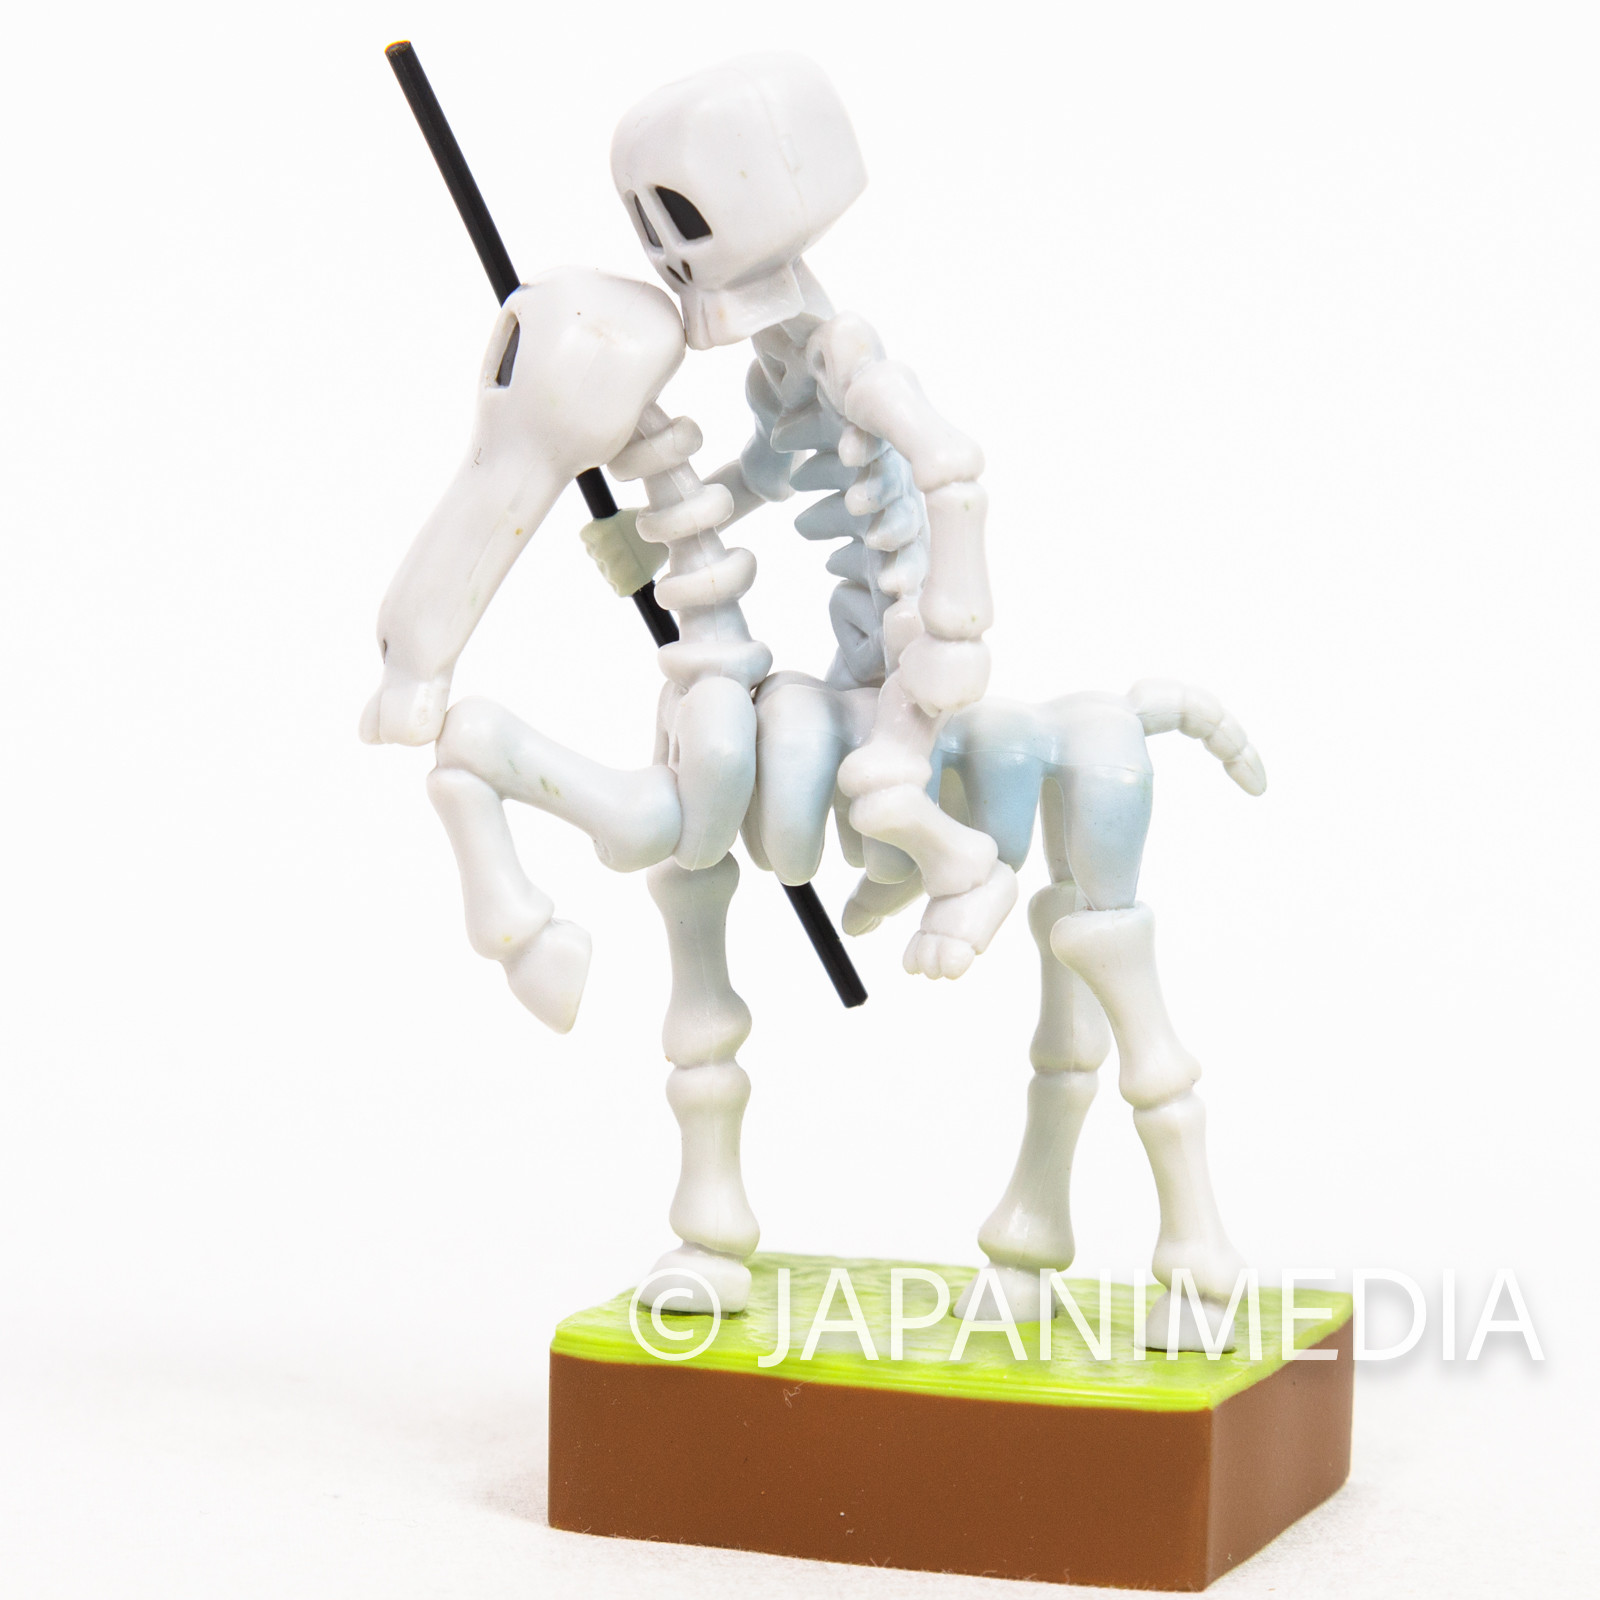 Hajime Ningen Gon Shinigami Reaper Mini Figure JAPAN ANIME MANGA GYATORUZ